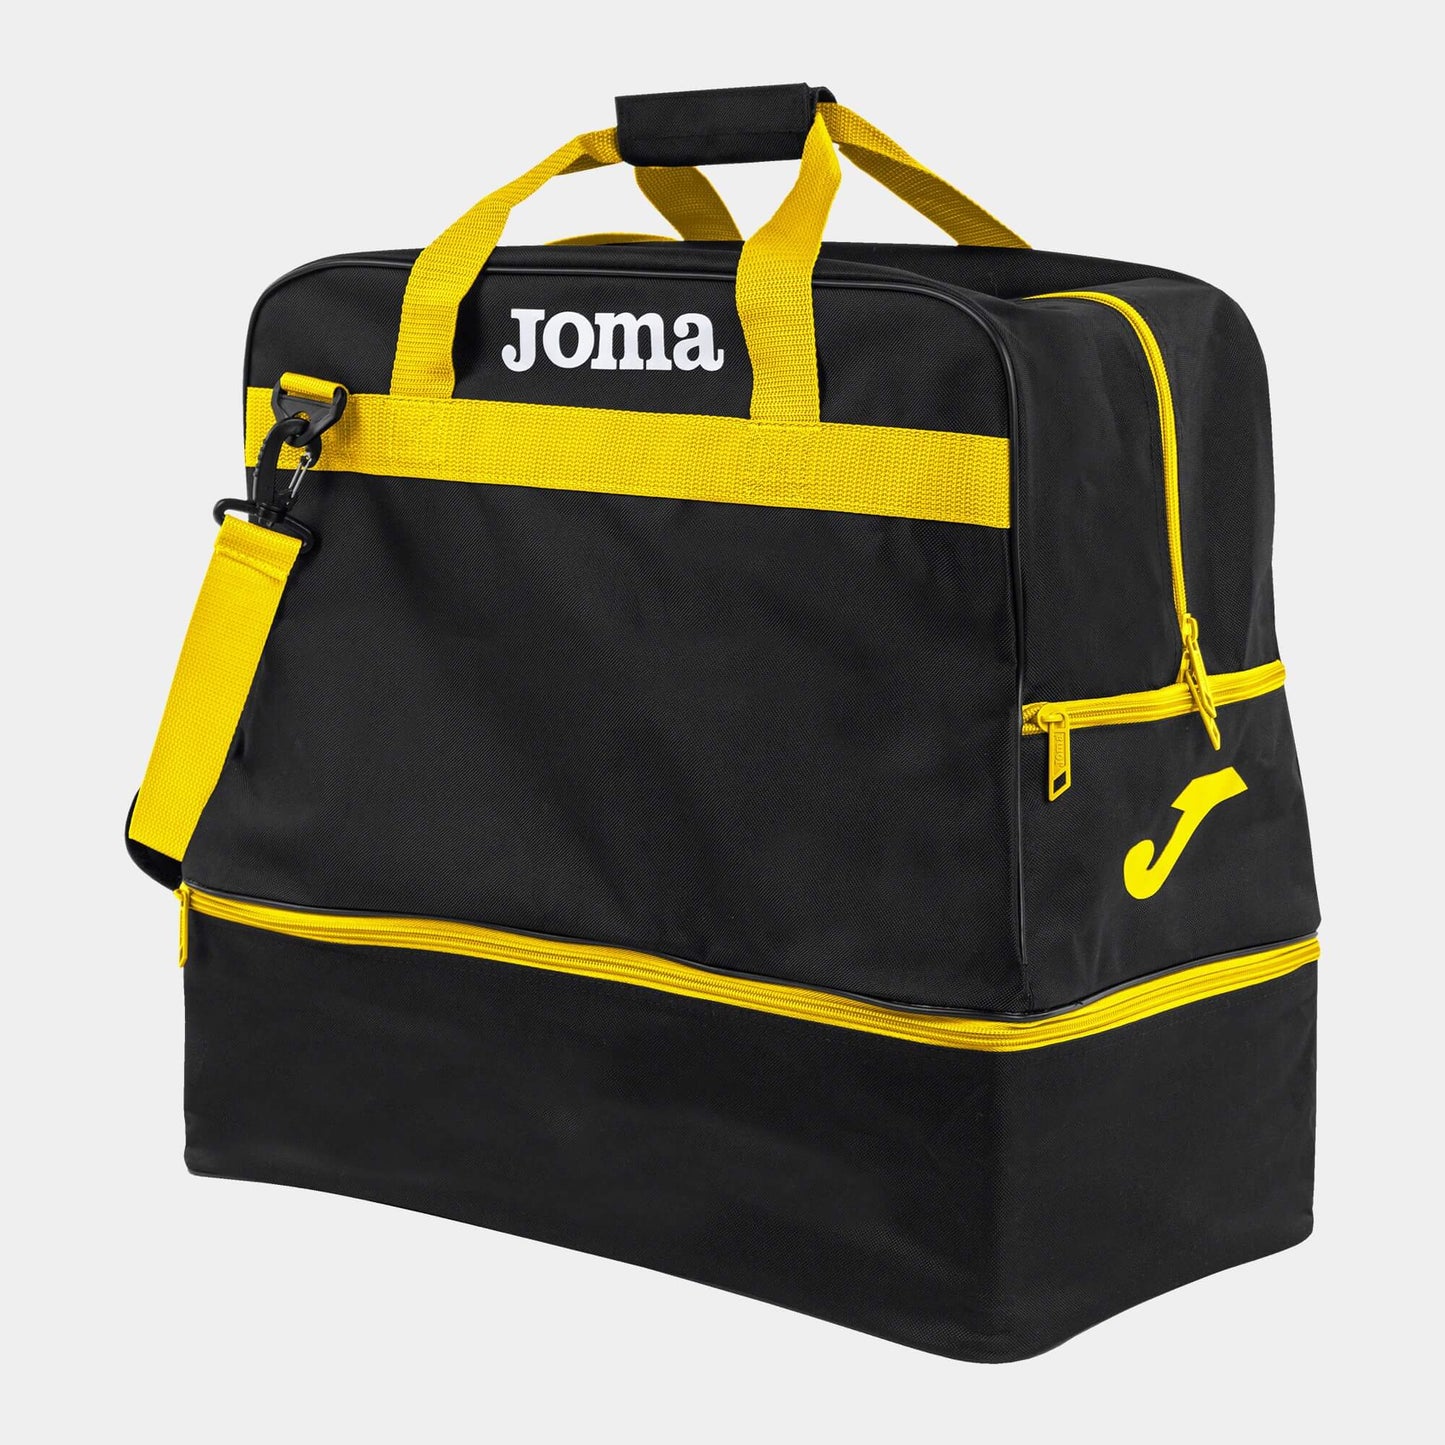 Joma Training II Large Duffel Bag